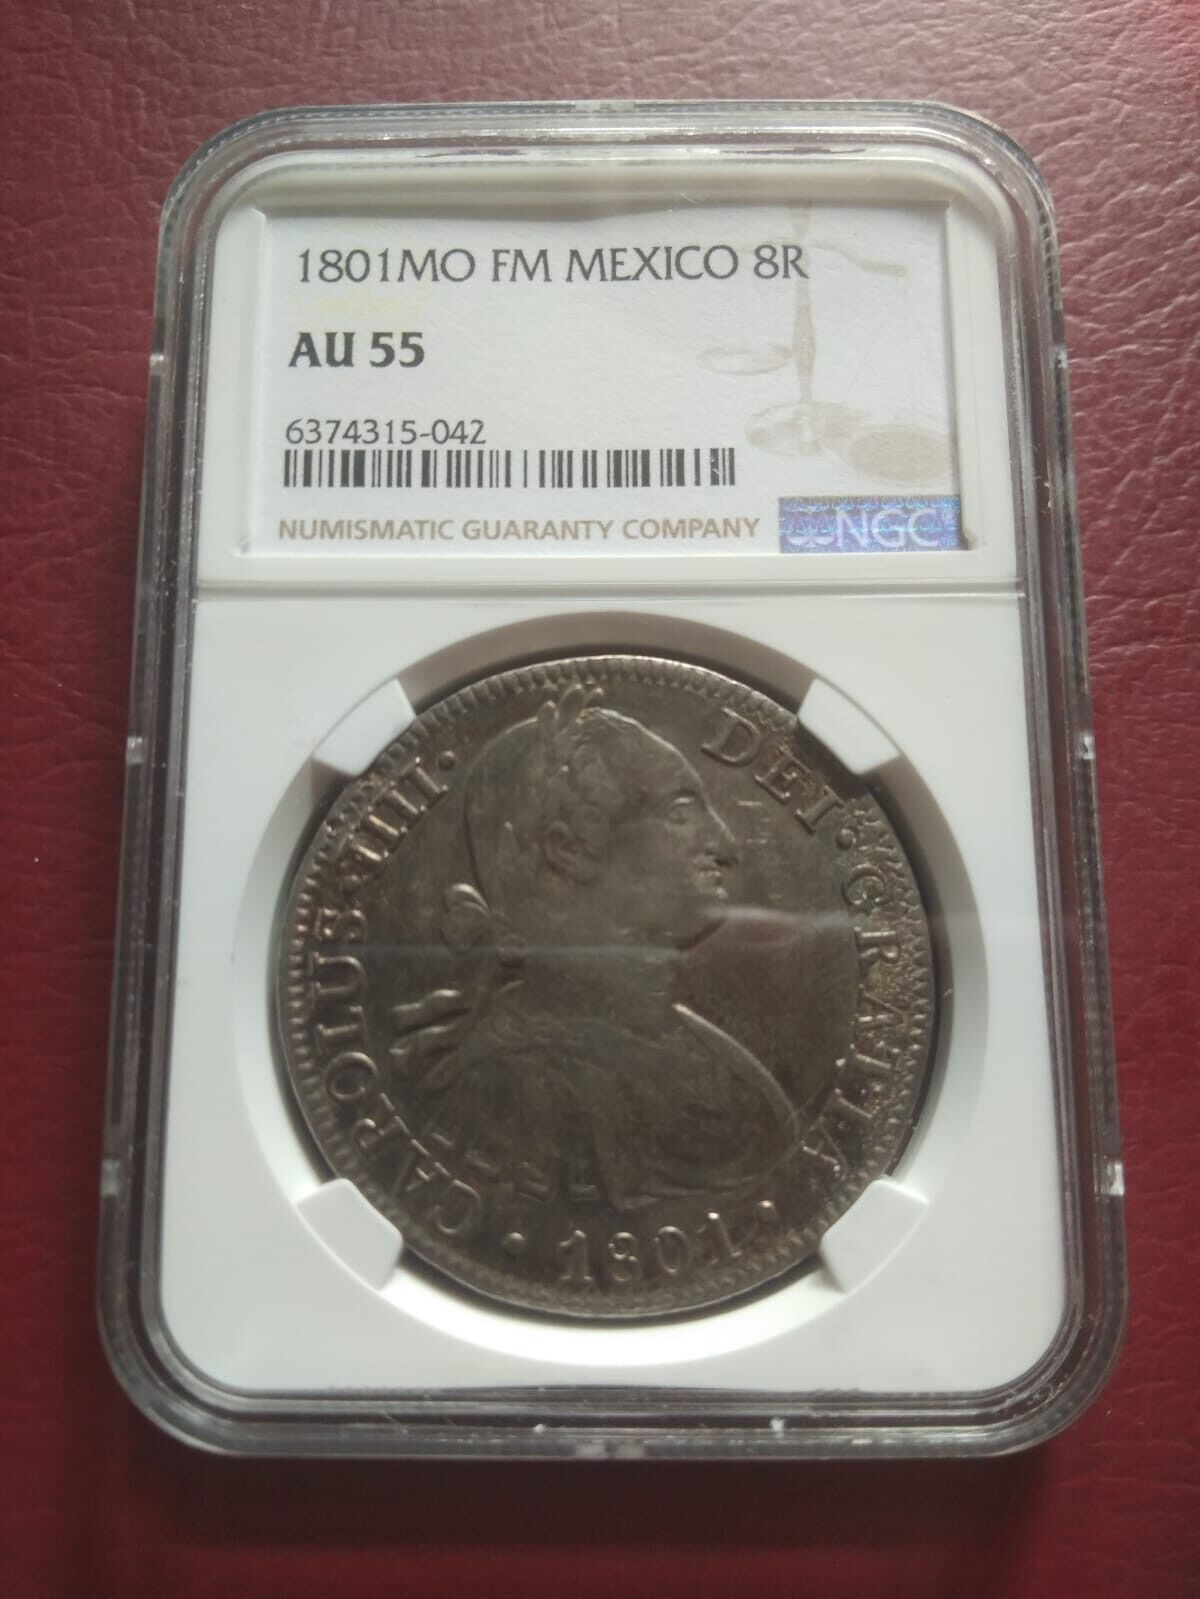 Ngc Au.55 Mexico 8 Reales 1801 Mofm Carolus Iiii Rare Grade